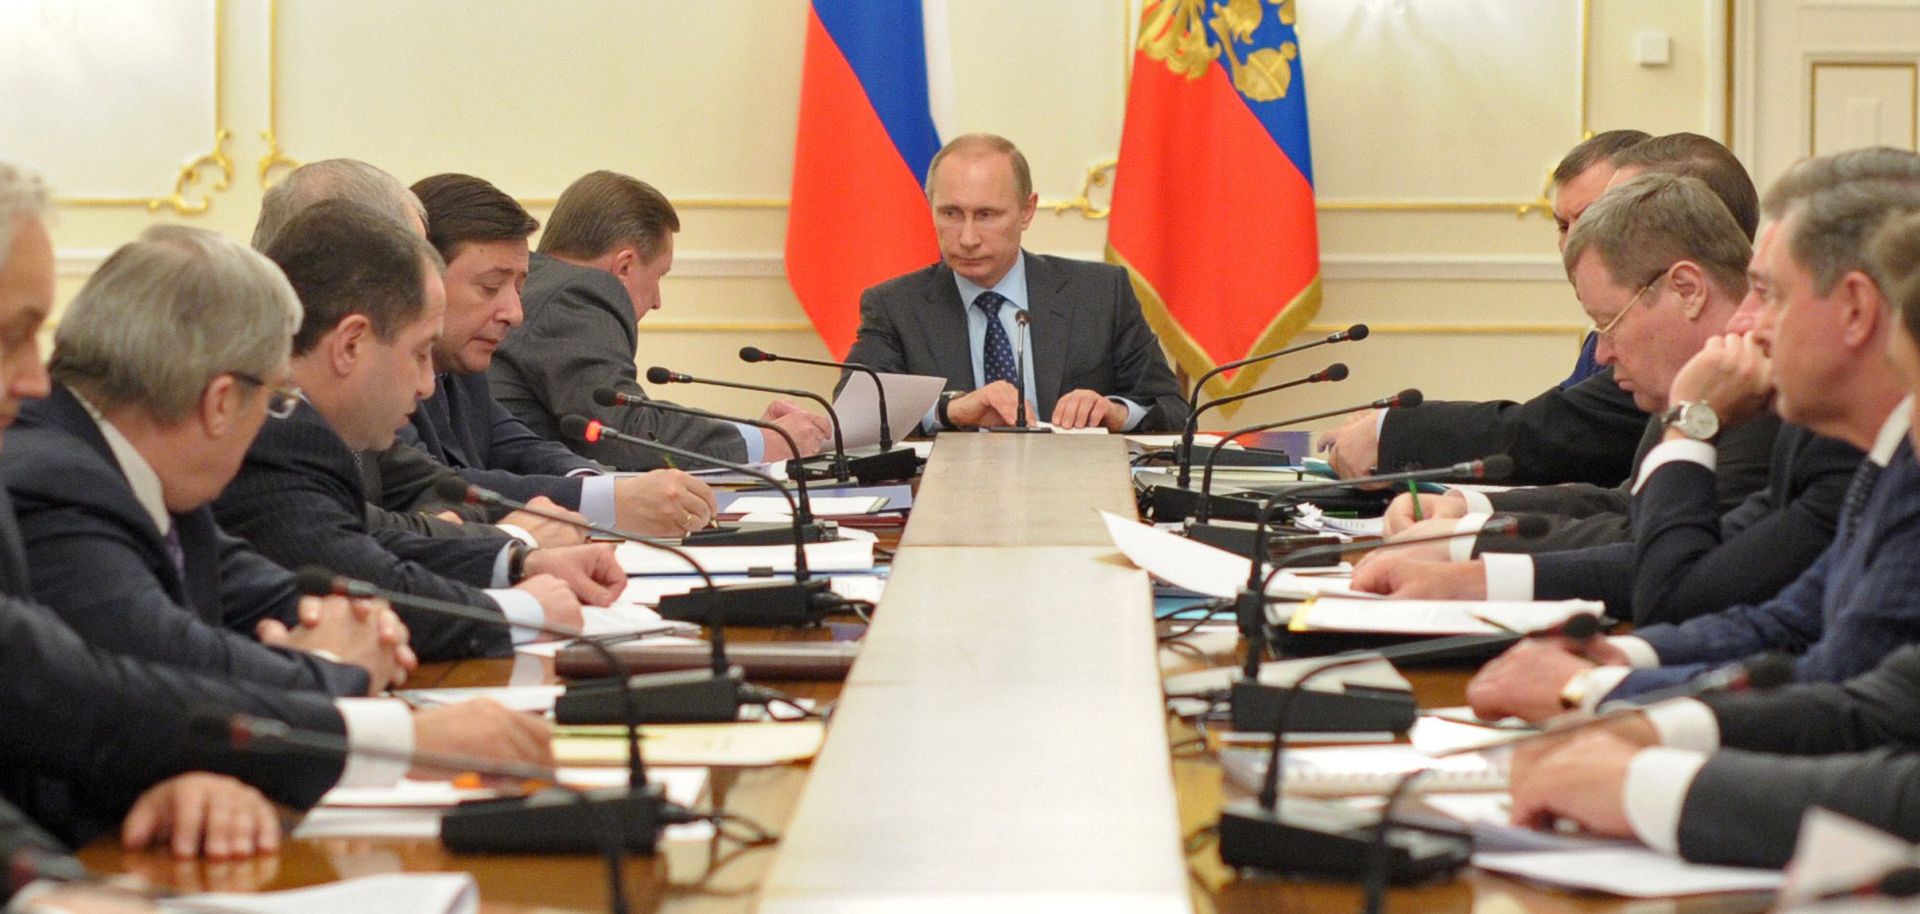 Budget Debates Reveal Russia's Weakness